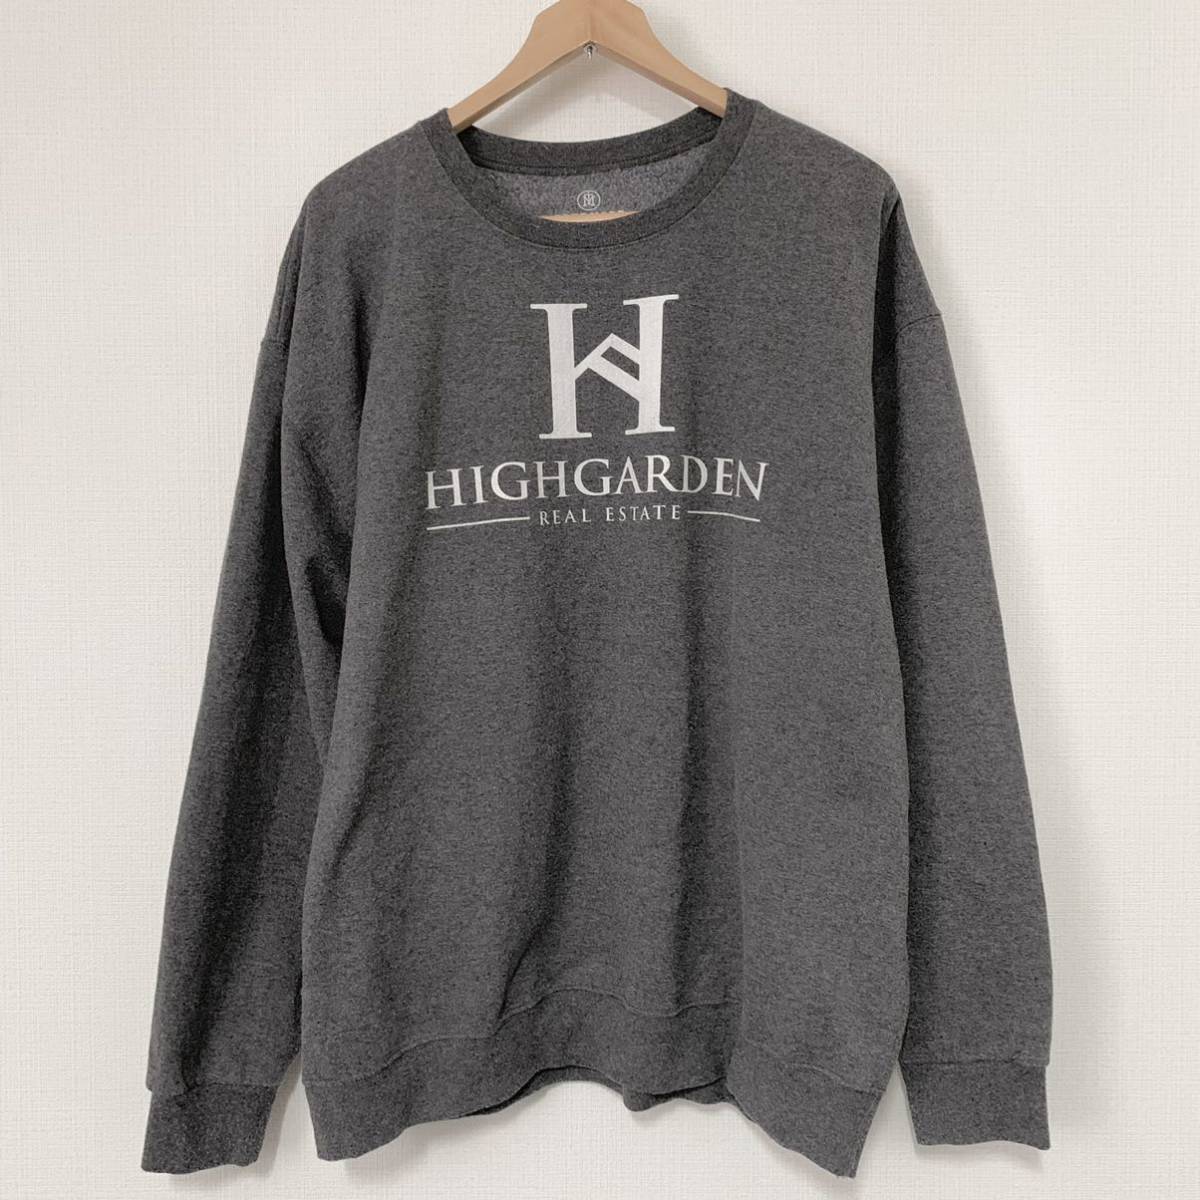 HIGHGARDEN/TRUEMADE(USA)ビンテージスウェットシャツ